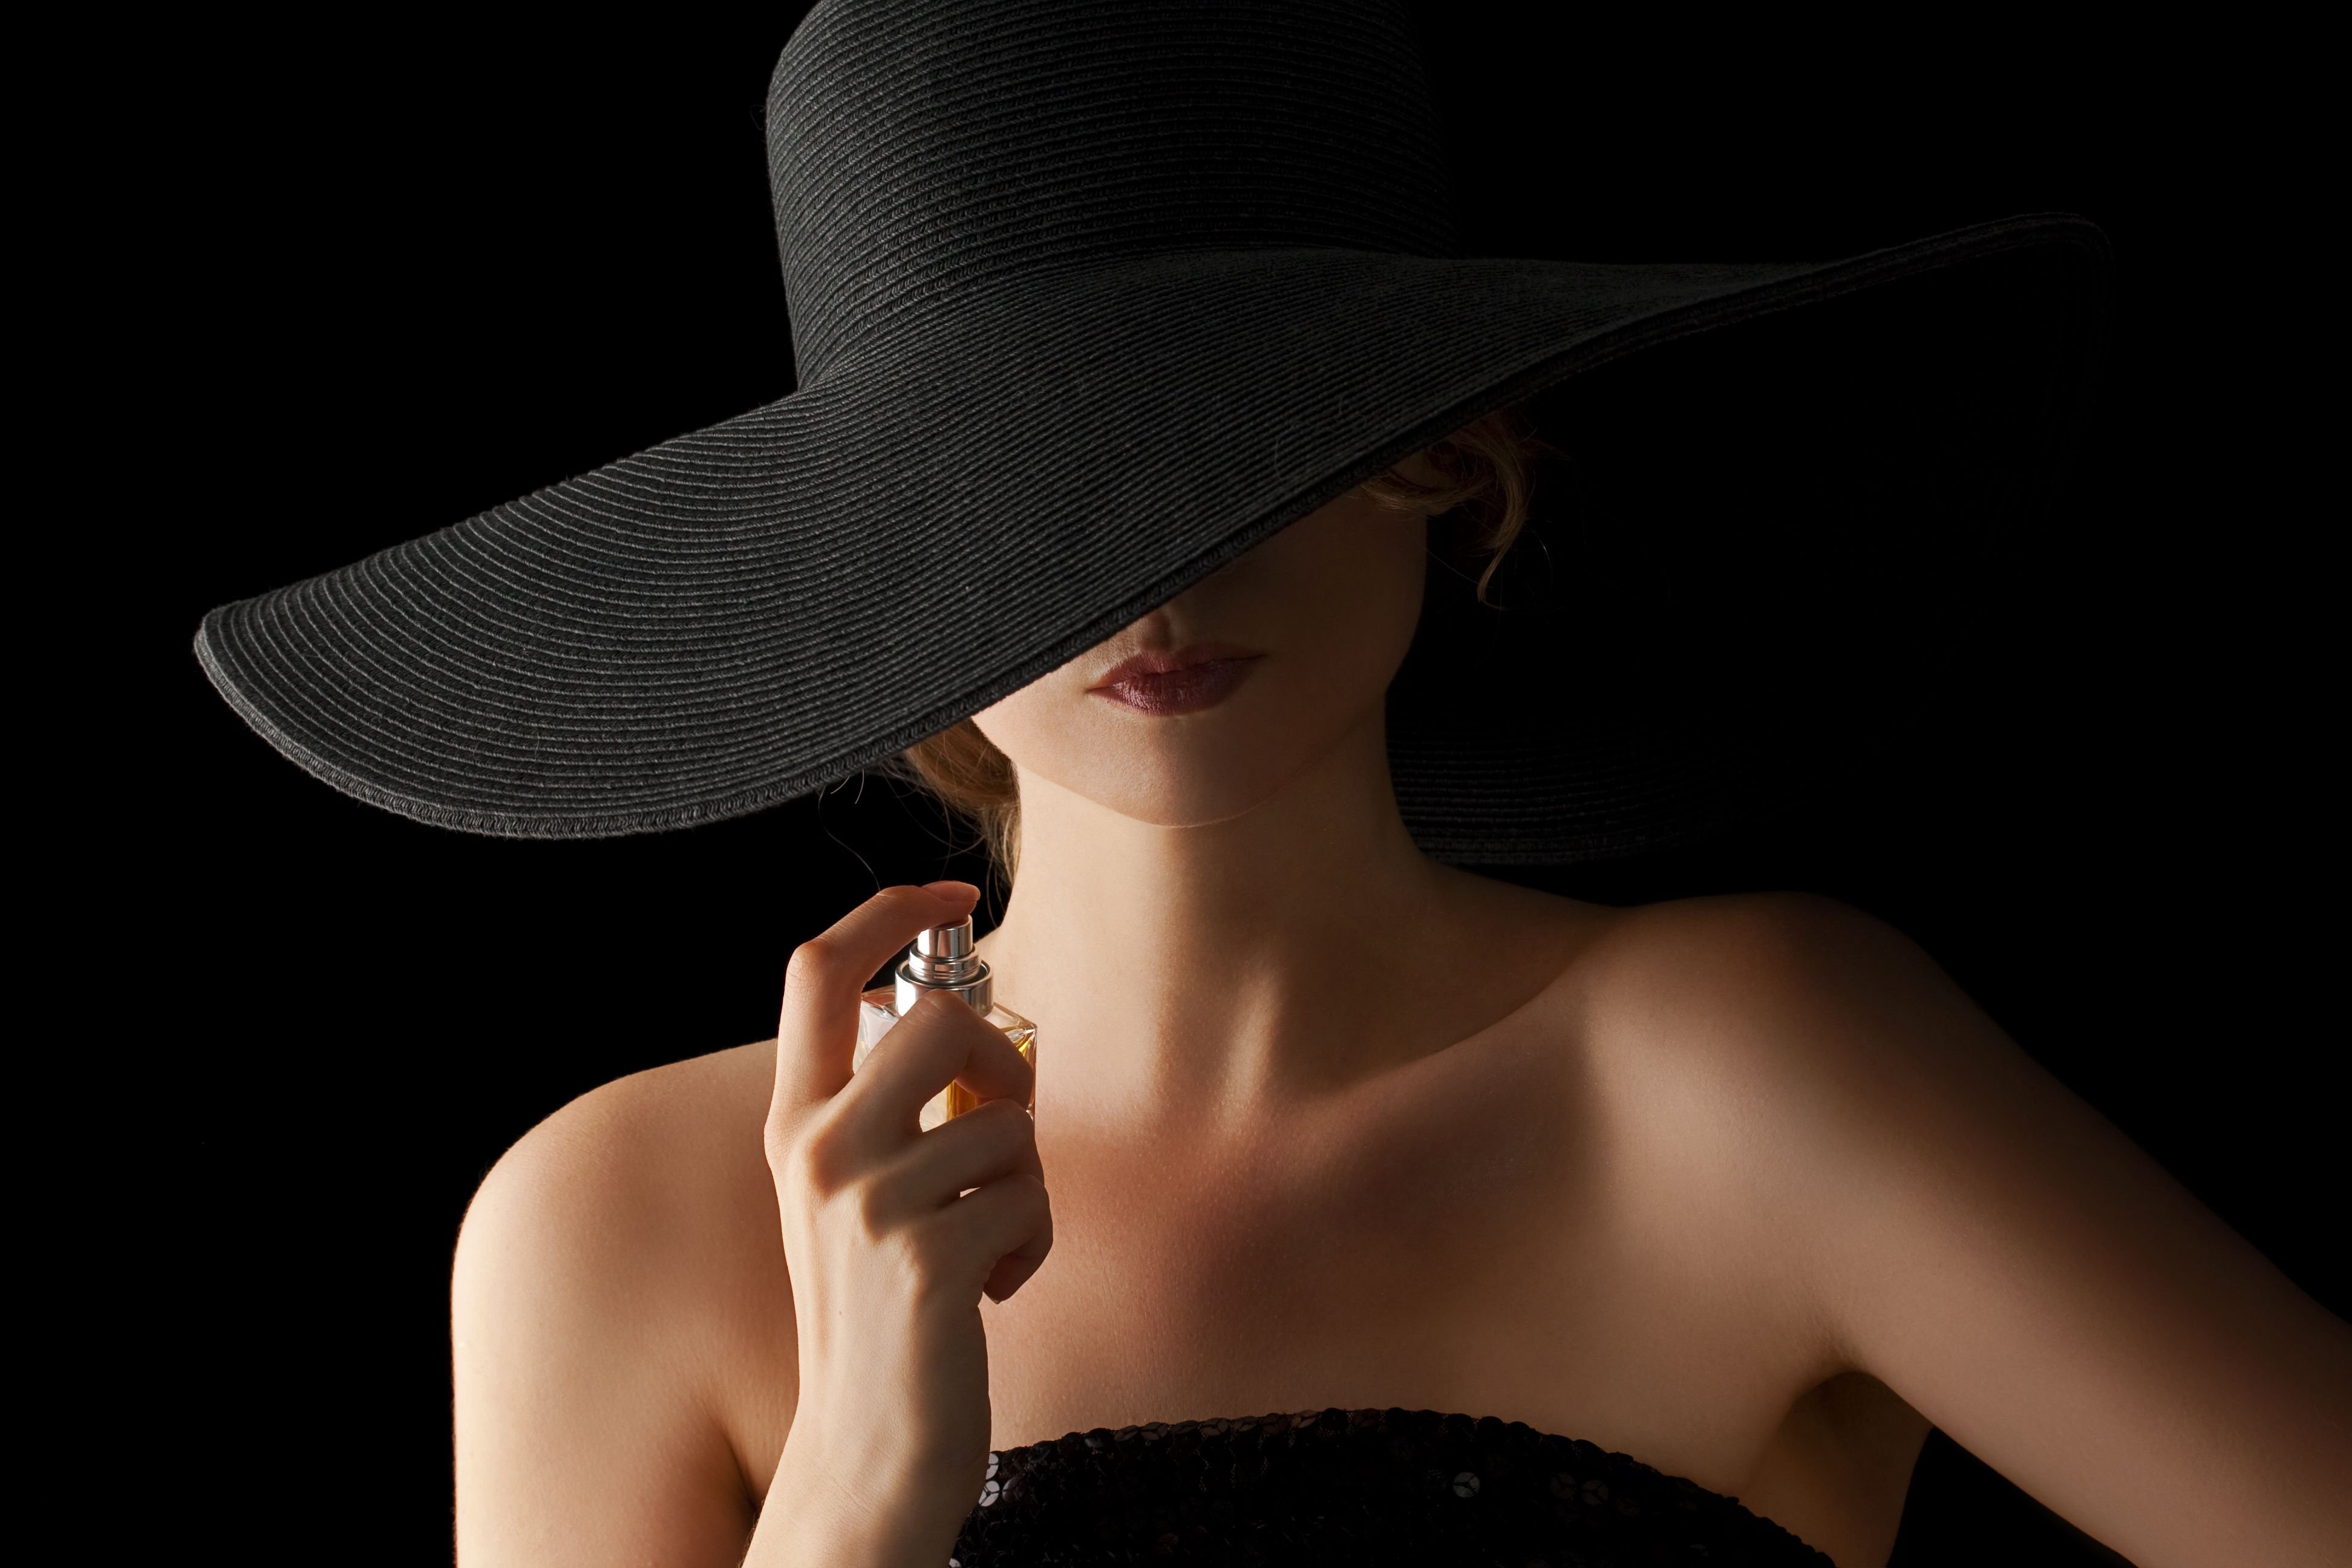 Картинки про женщин. Натали Портман в шляпе. Девушка в шляпе. Девушка в черной шляпе. Загадочная девушка в шляпе.